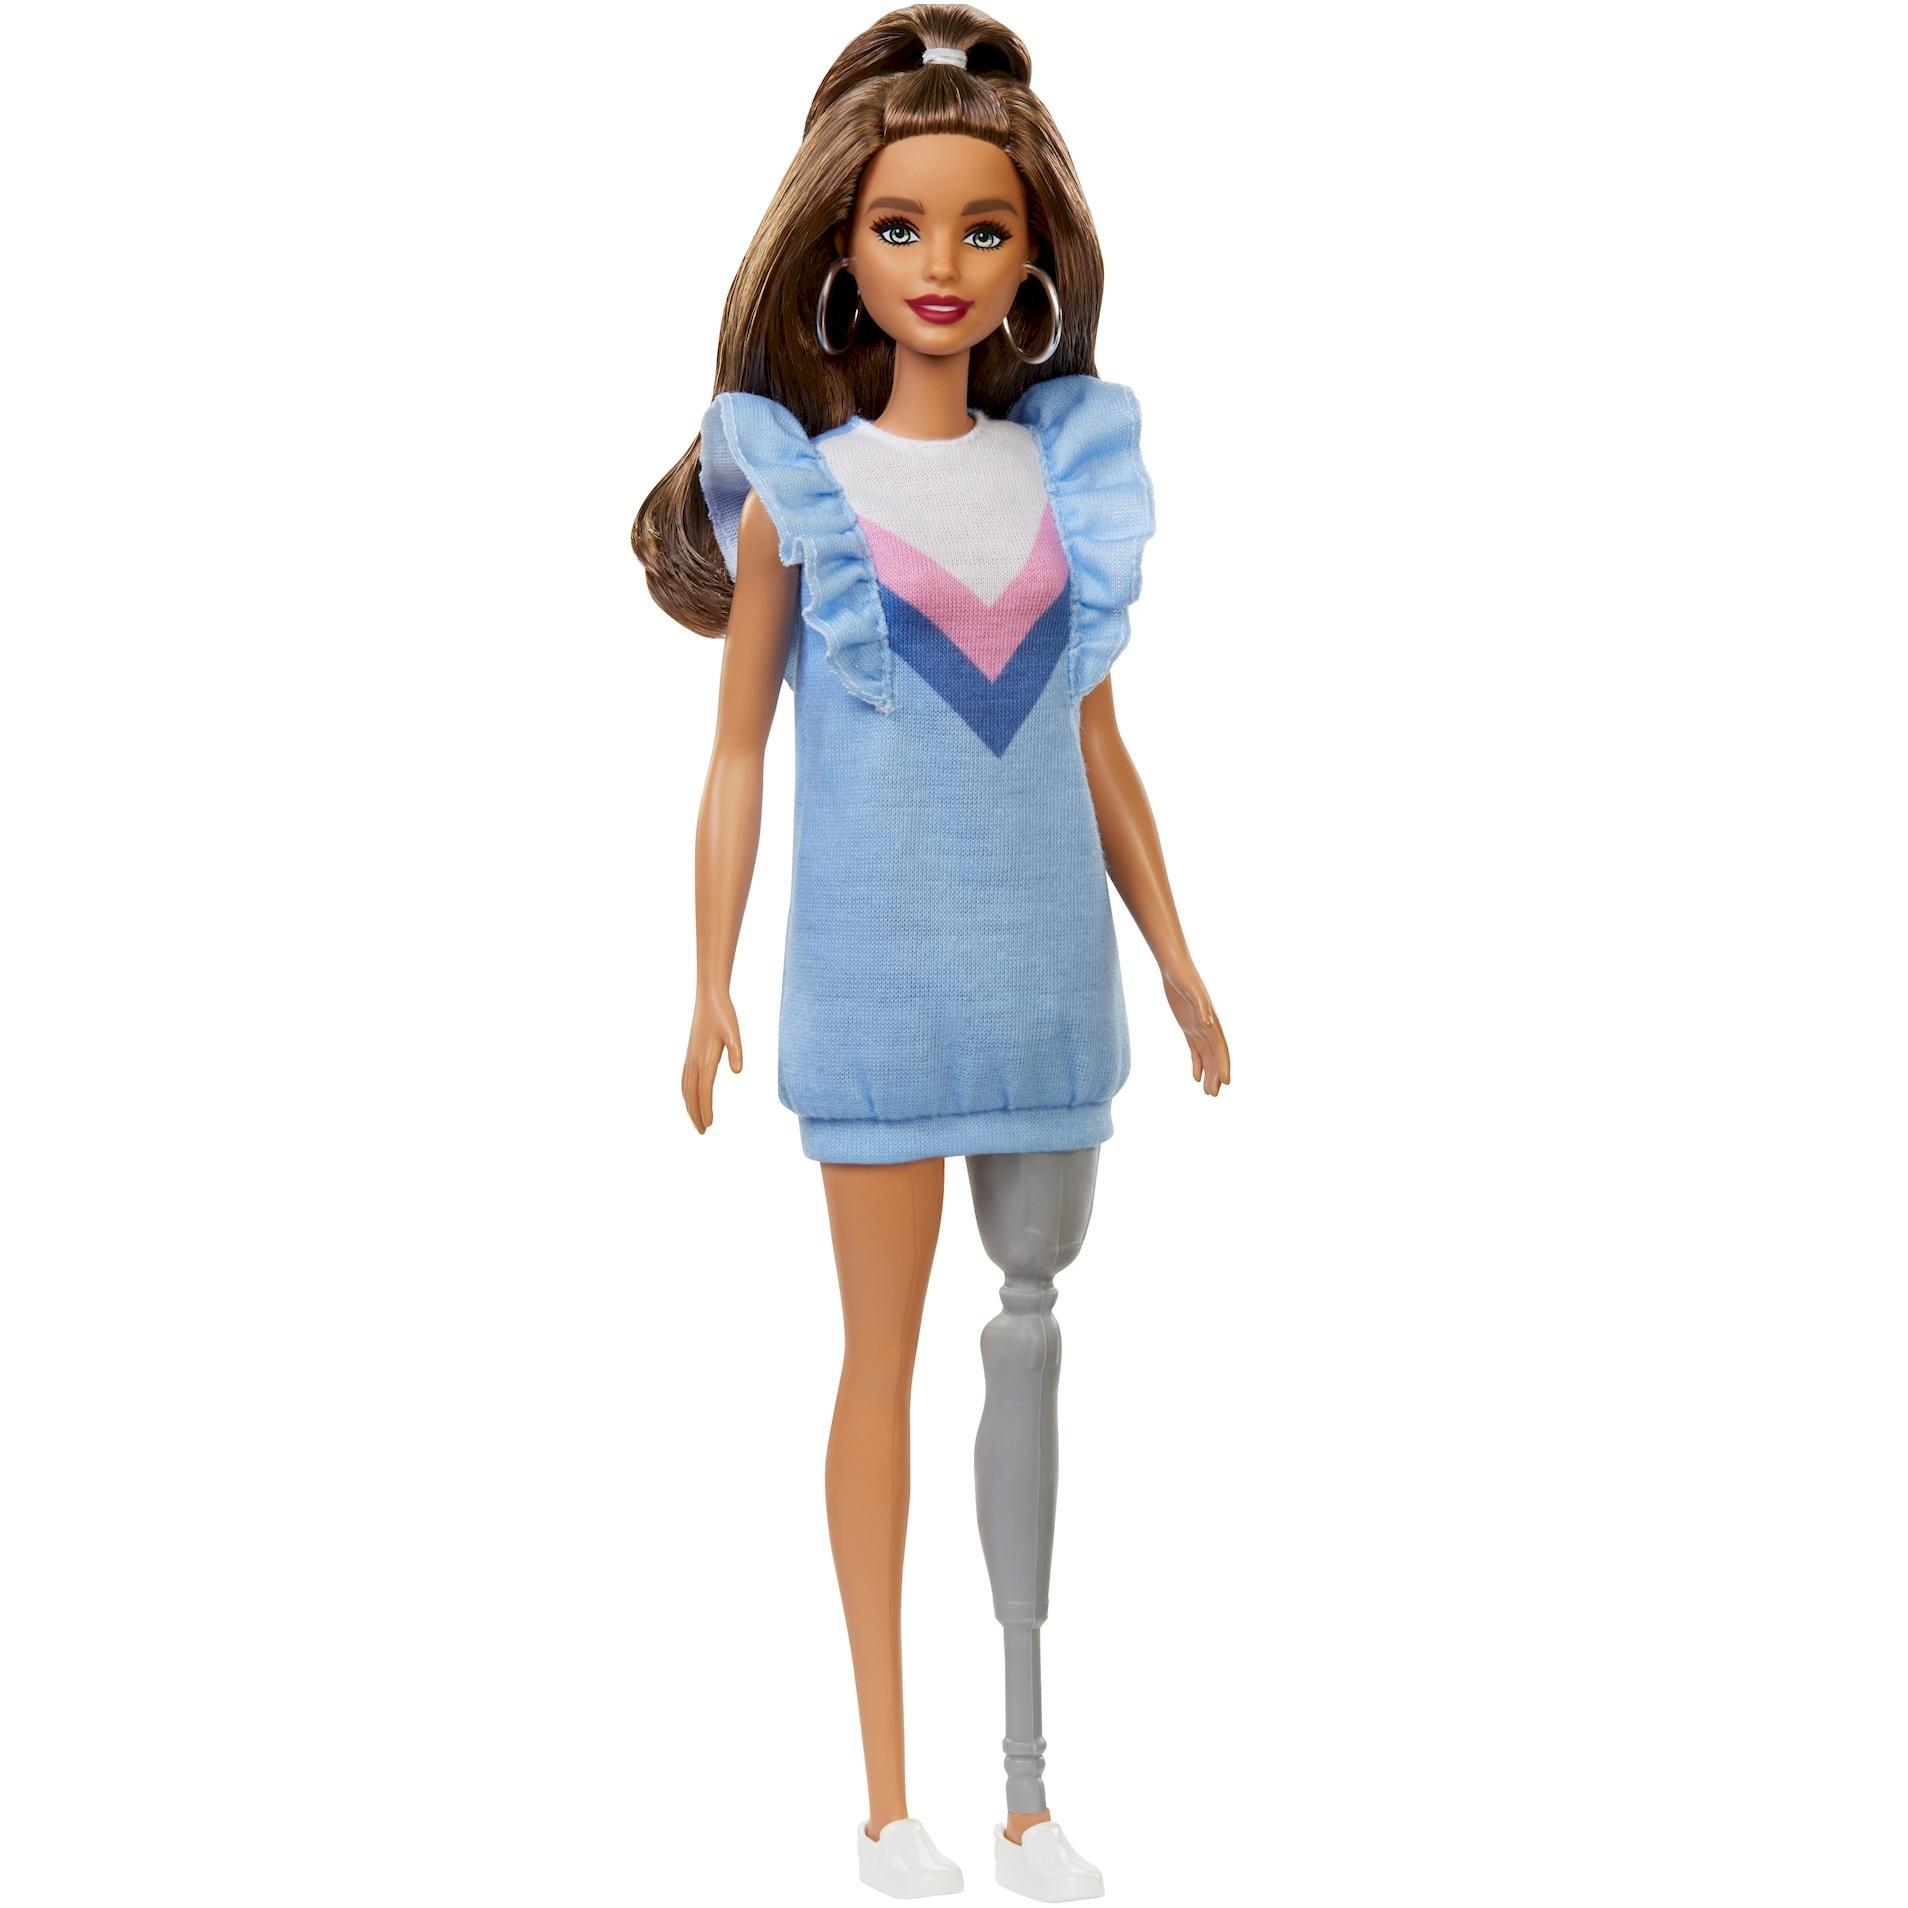 Barbie Fashionistas Barbie Doll Assortment121